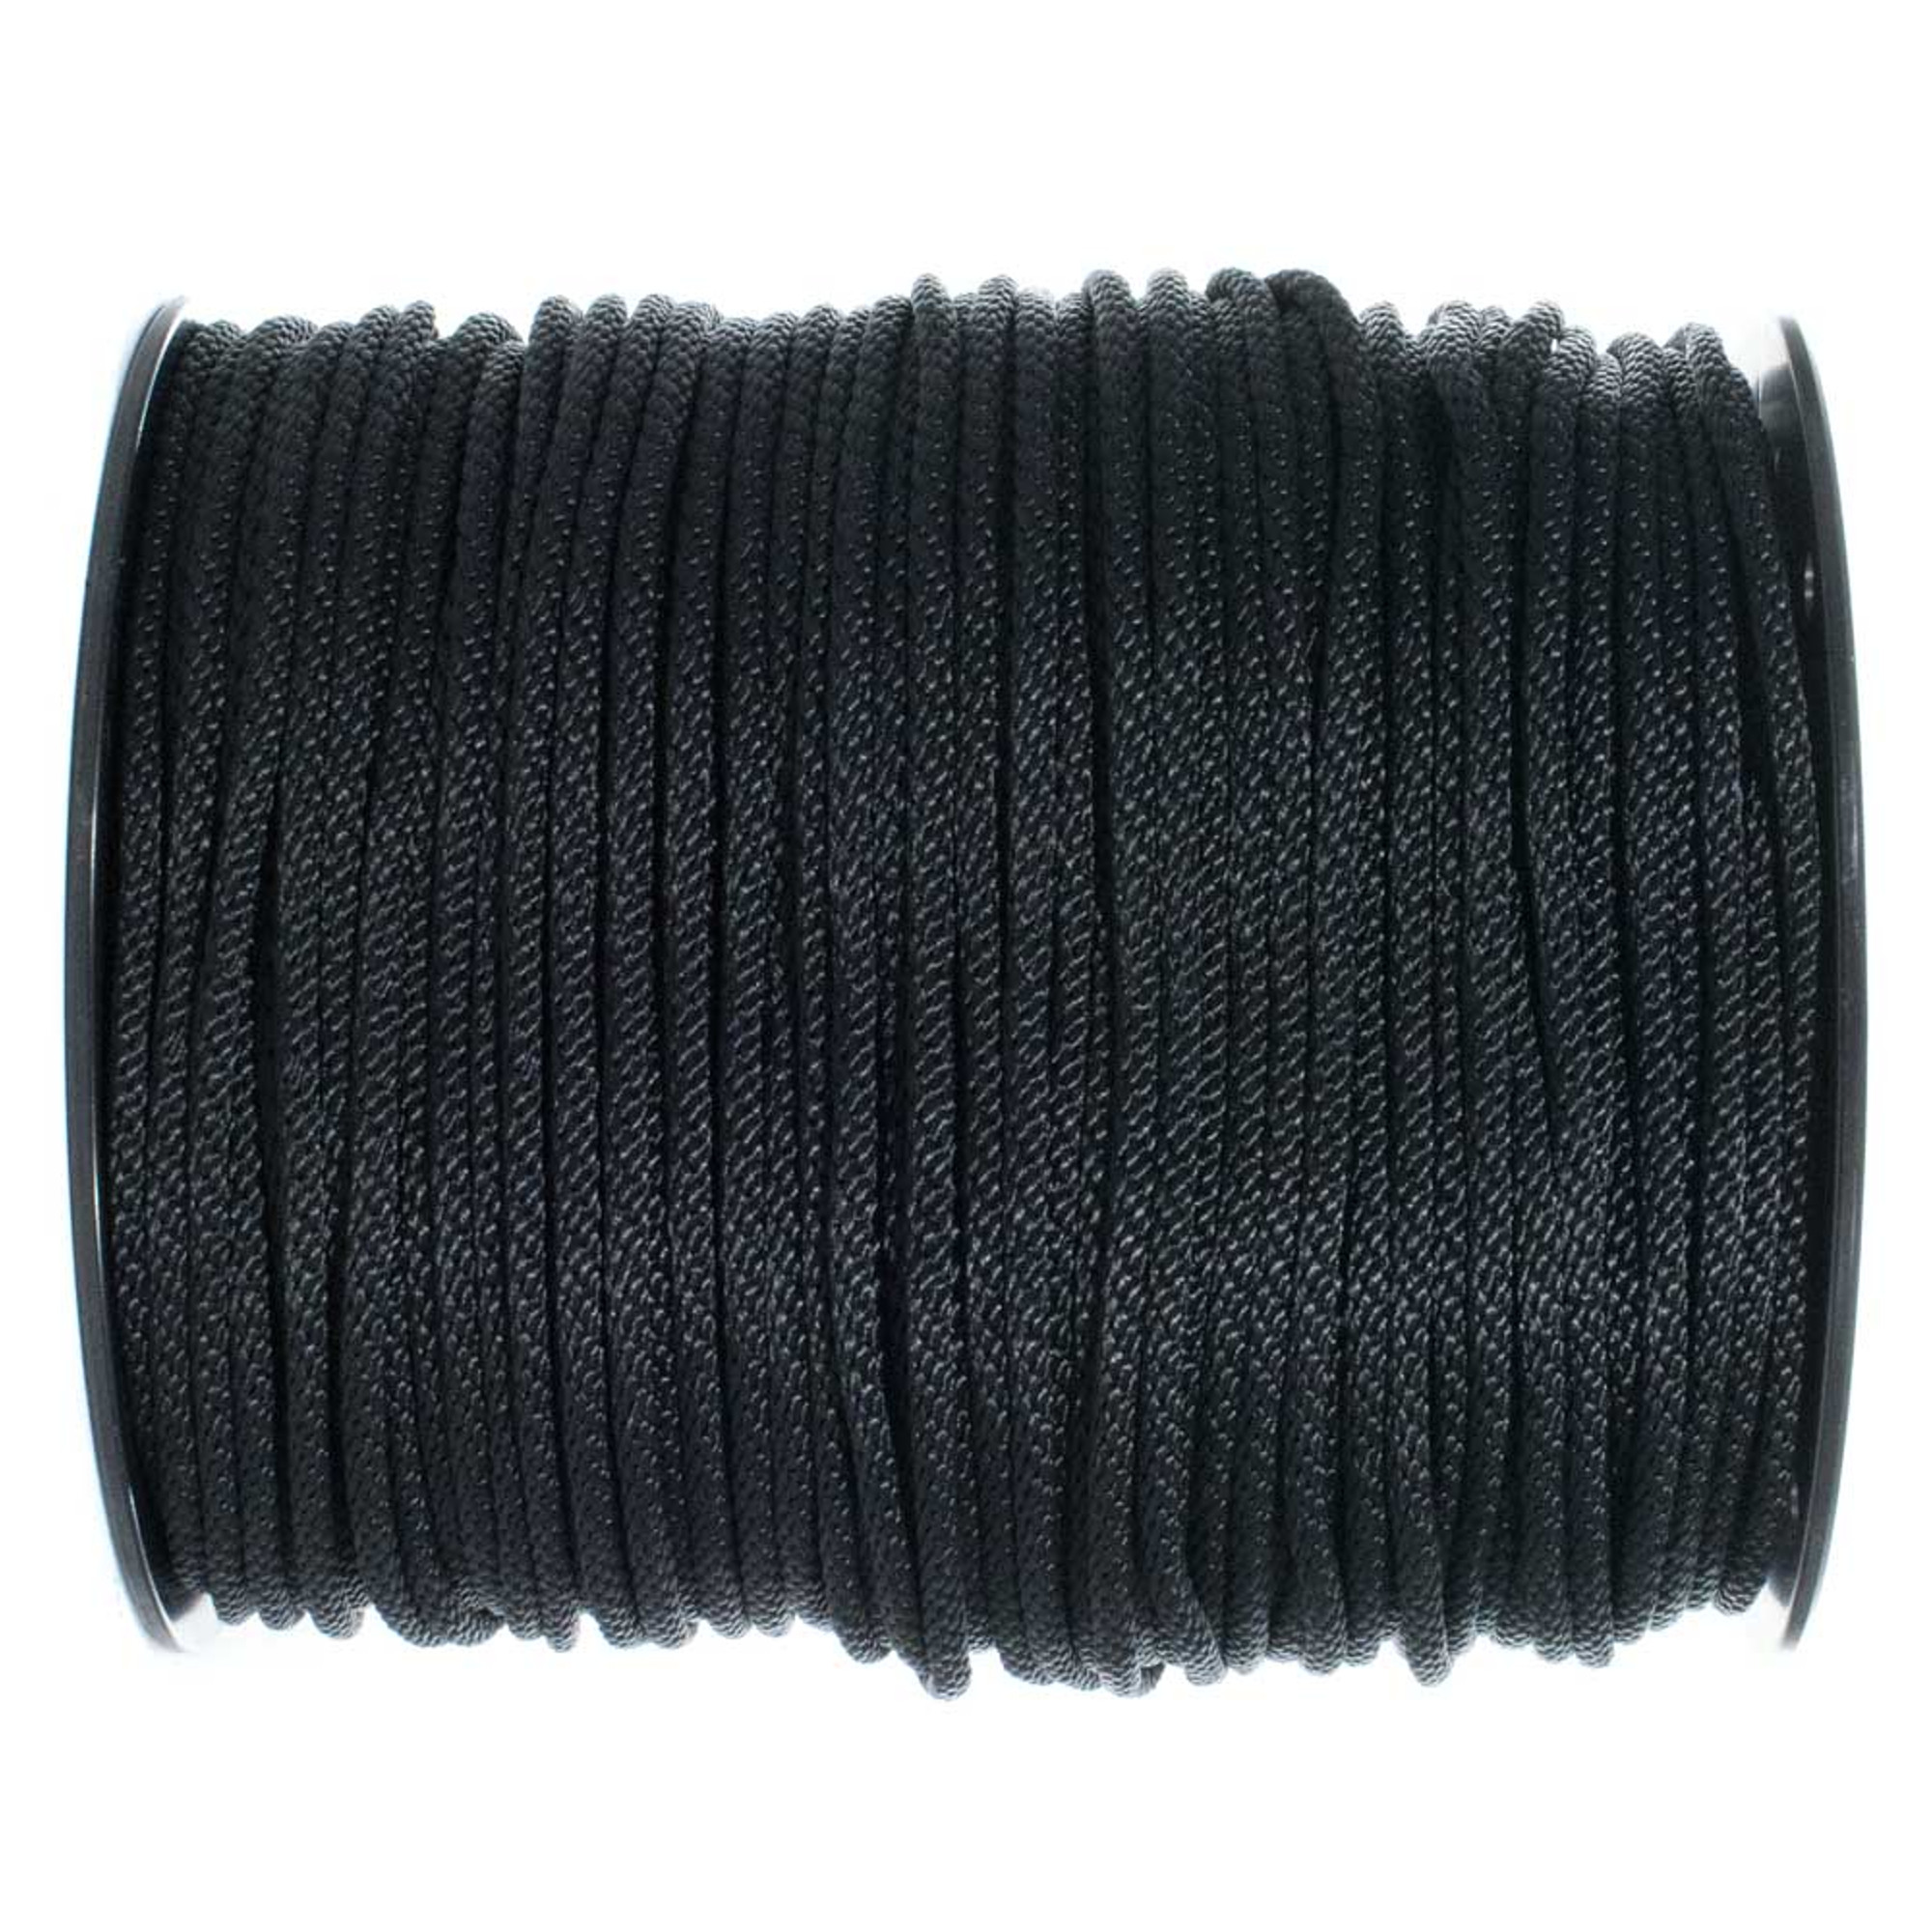 Golberg Solid Braid Black or White Nylon Rope 1/8-inch, 3/16-inch, 1/4-inch, 5/16-inch, 3/8-inch, 1/2-inch - Various Lengths - image 1 of 4